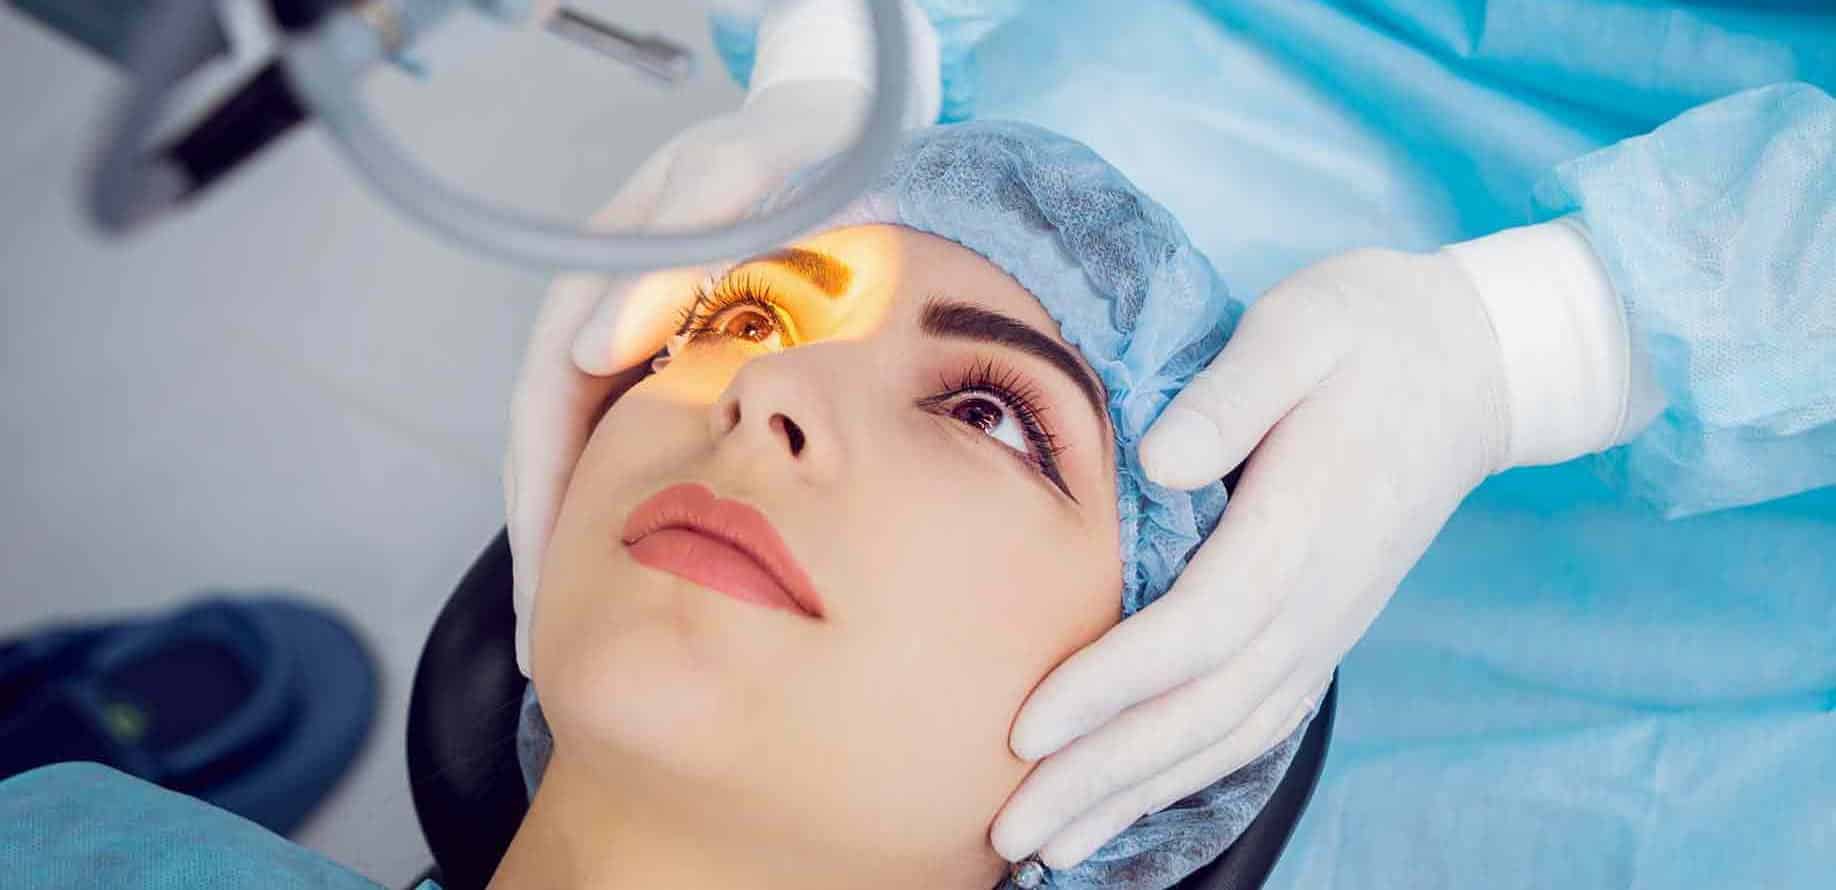 operation on eye cataract surgery e1547032979785 - موقع رموش